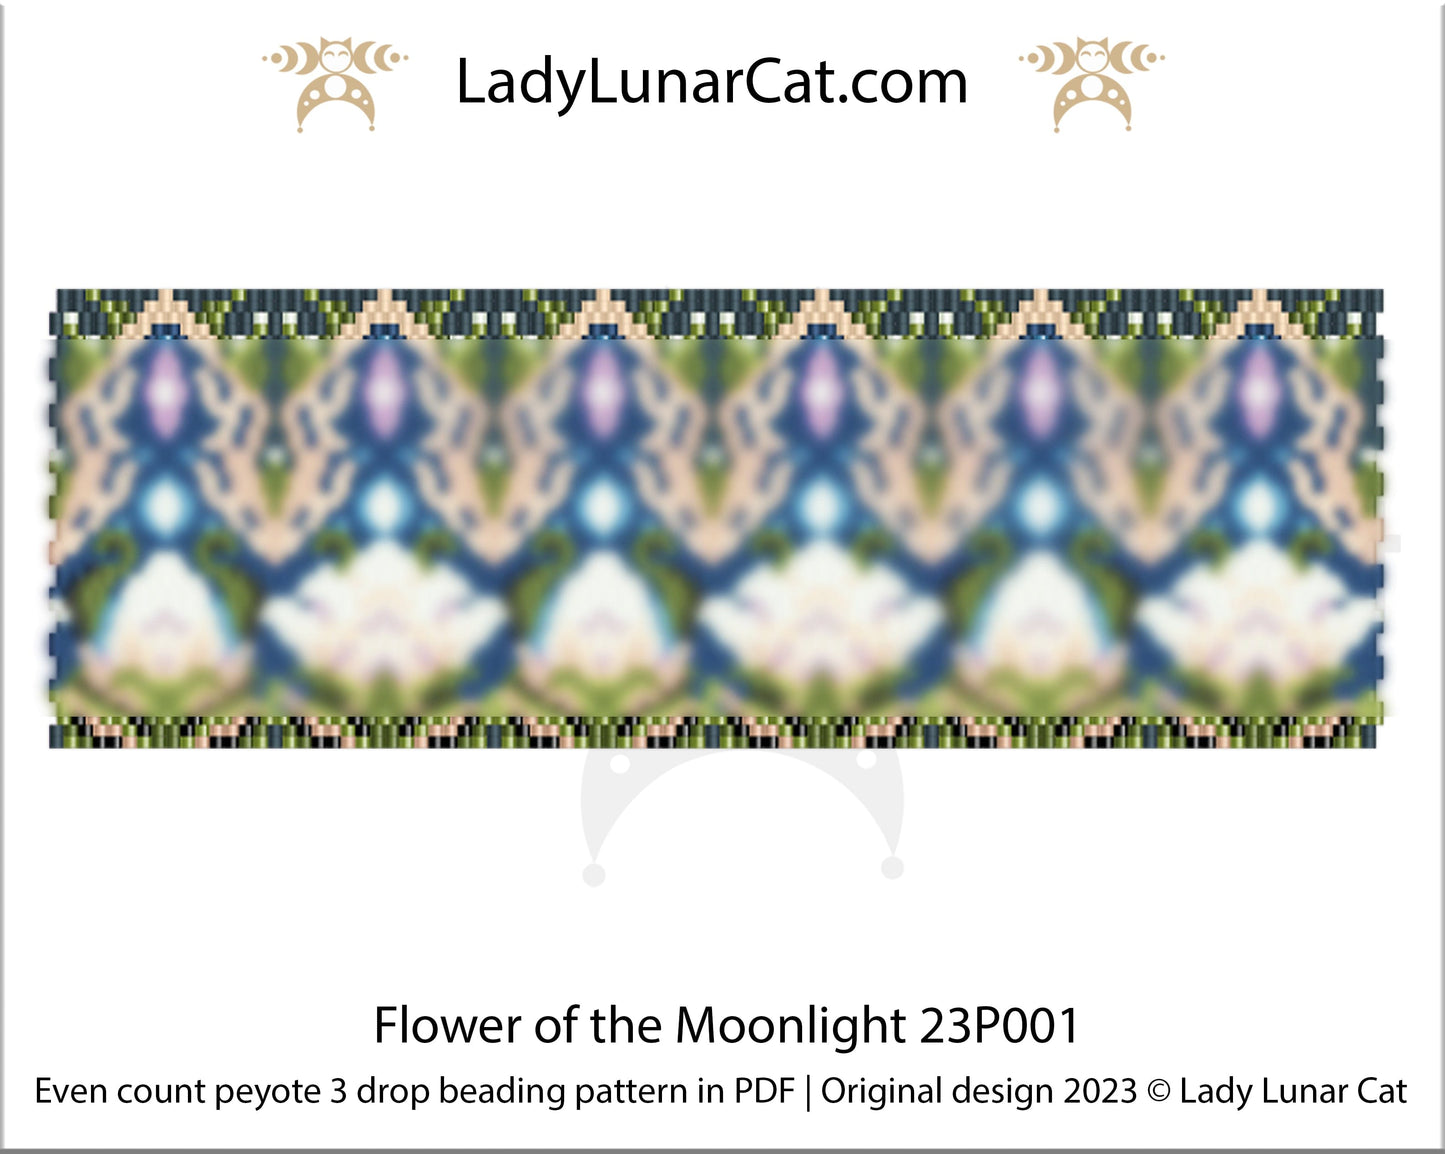 Peyote 2drop bracelet pattern for beading Flower of the Moonlight 23P001 LadyLunarCat